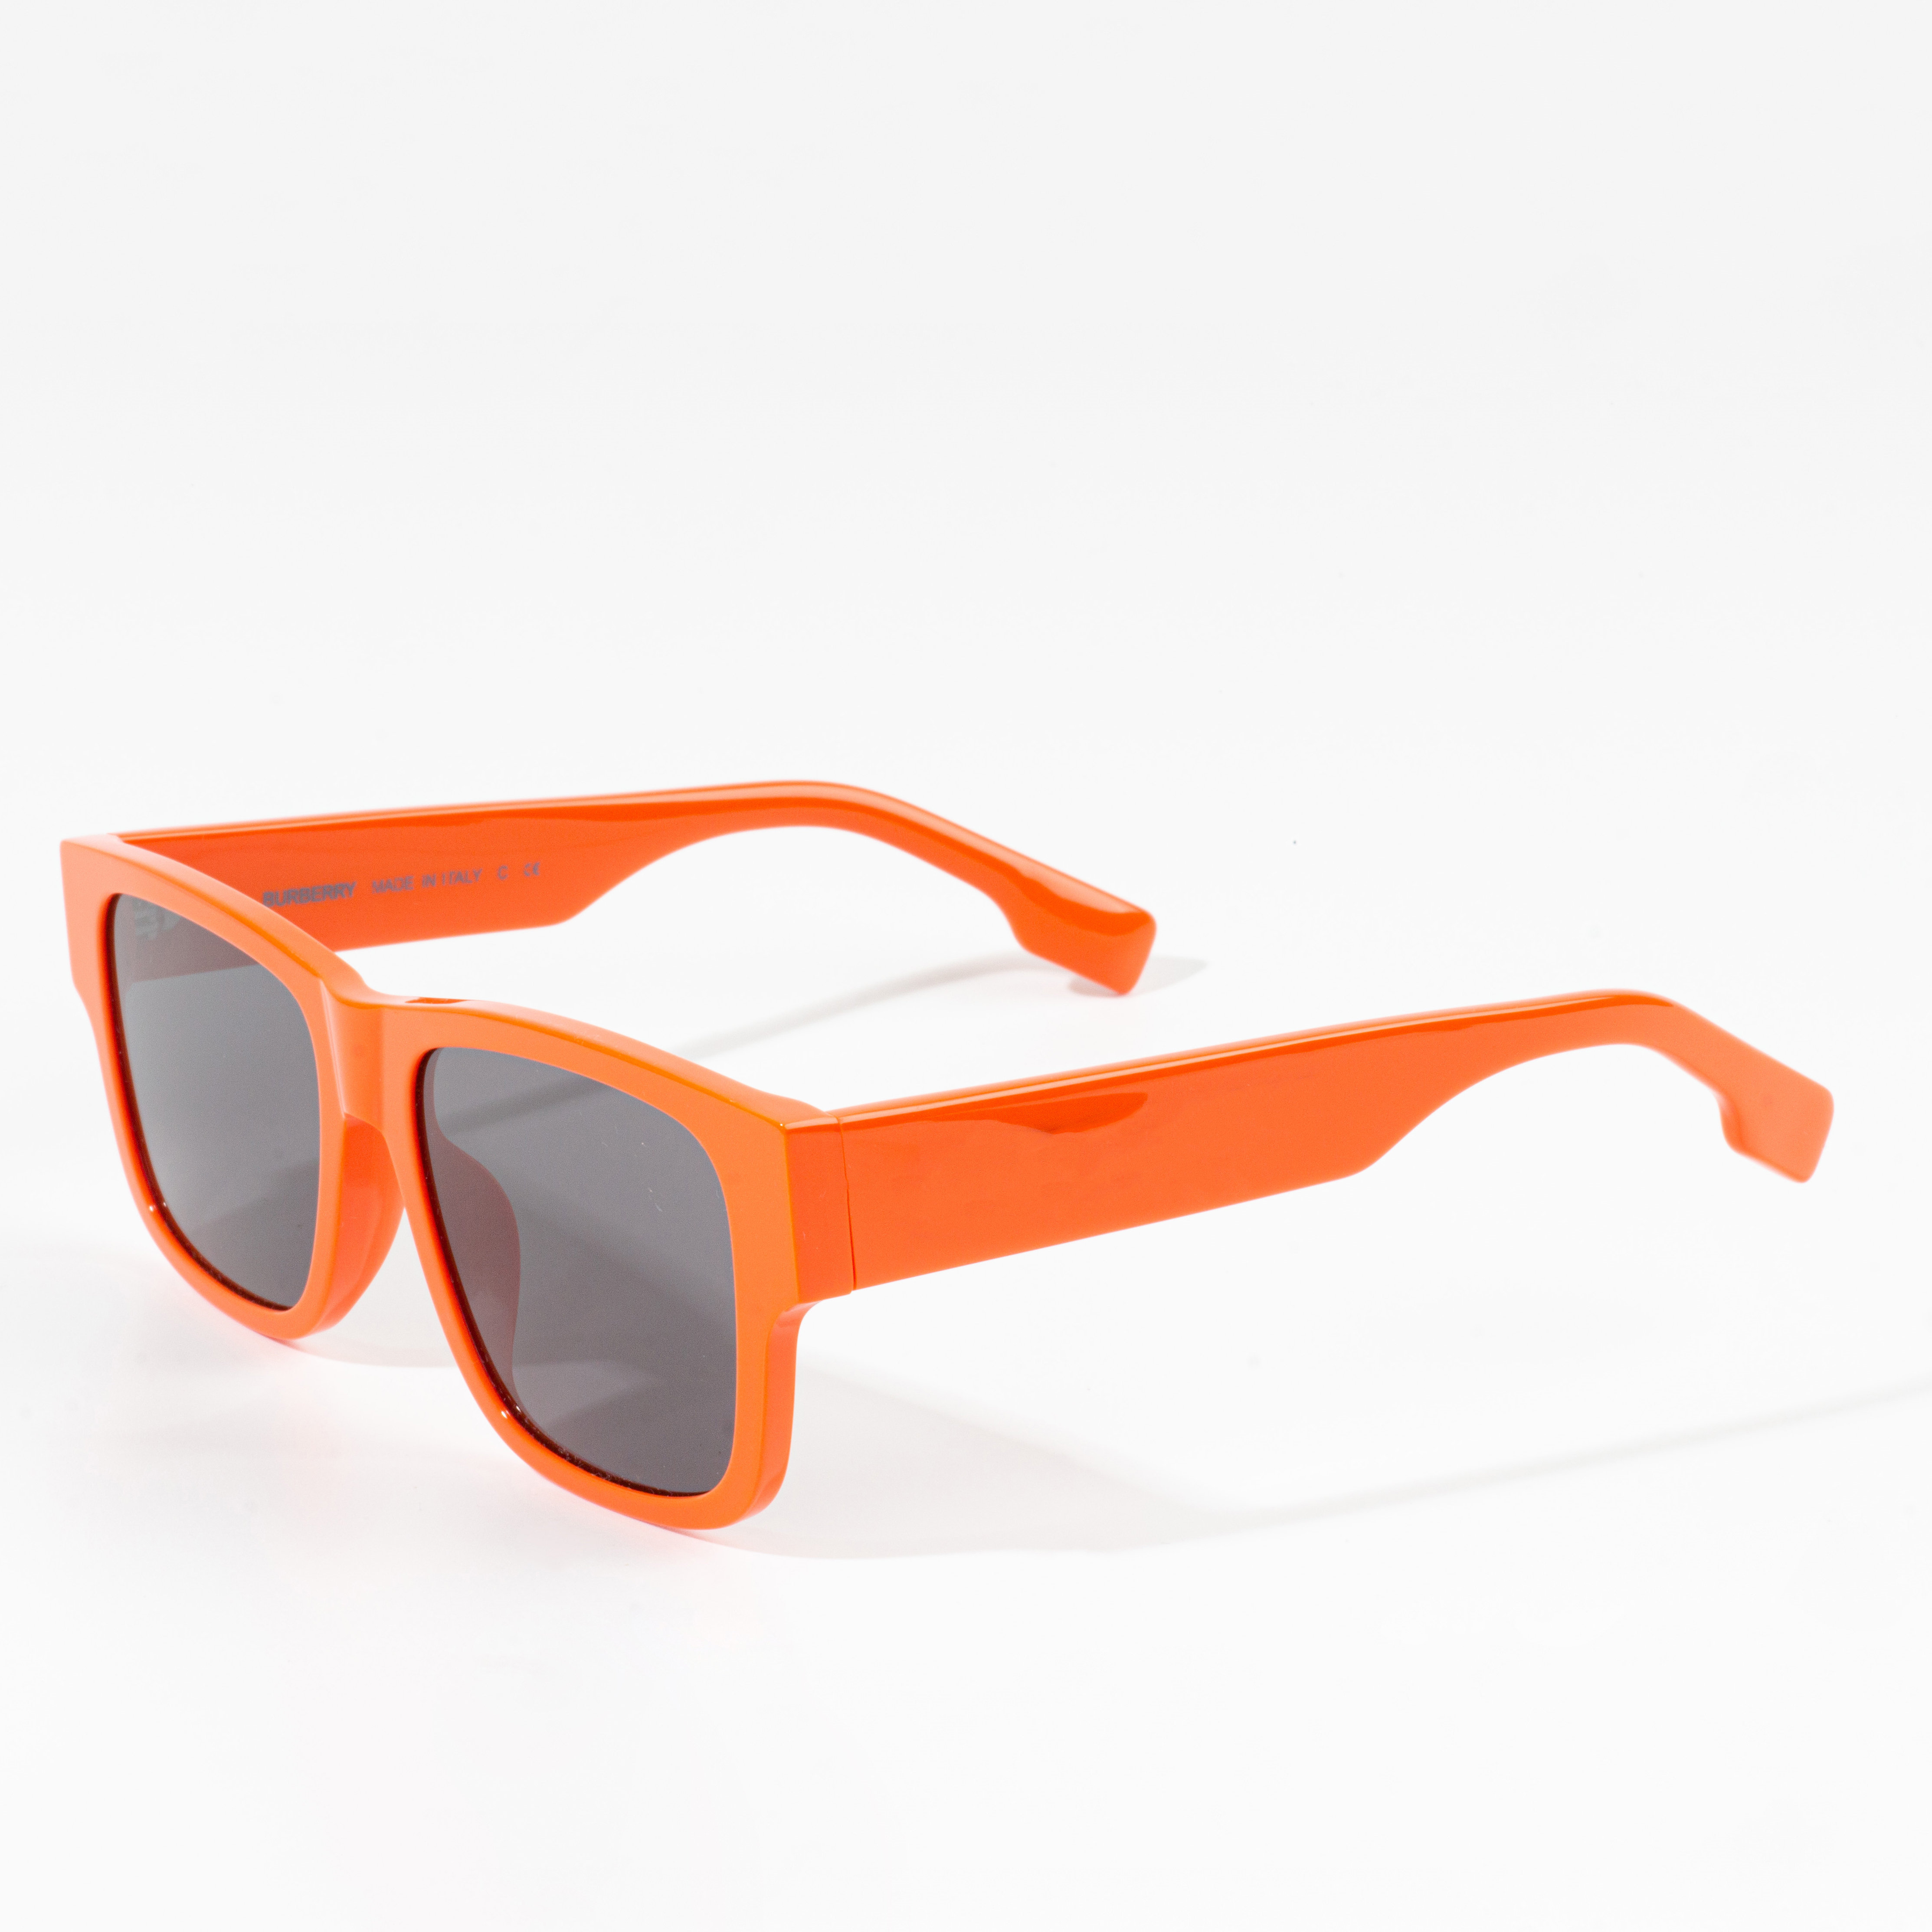 Hot sale sunglasses